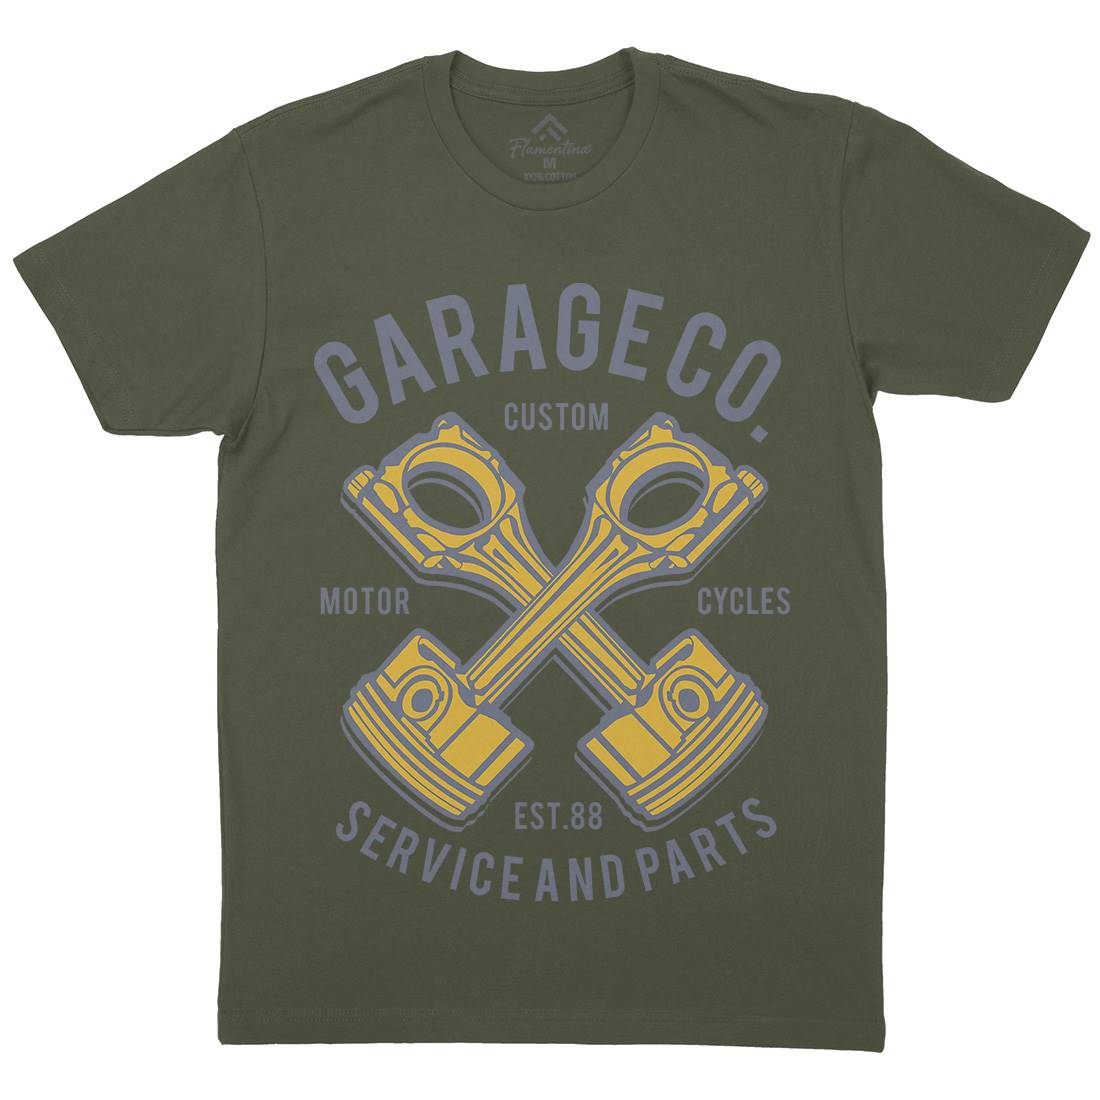 Garage Co Mens Crew Neck T-Shirt Cars B216